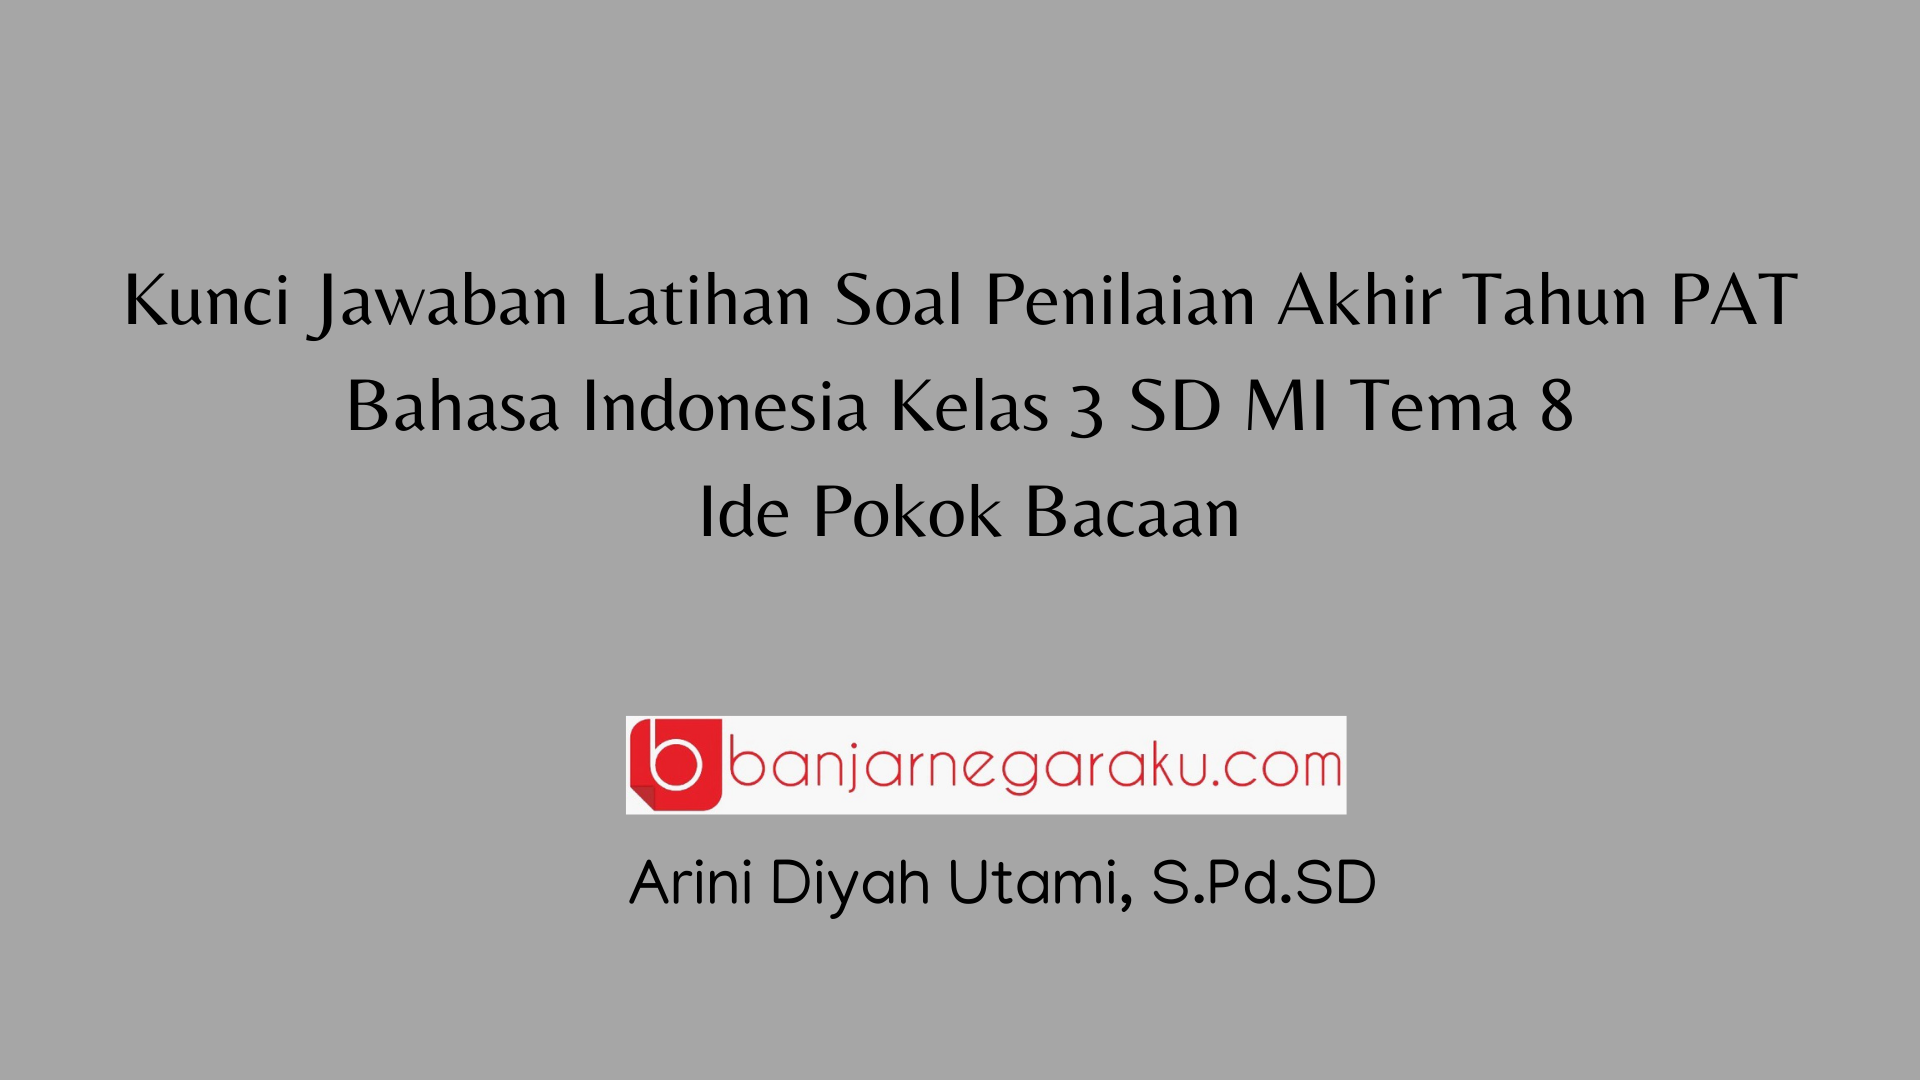 Kunci Jawaban Latihan Soal Penilaian Akhir Tahun PAT Bahasa Indonesia Kelas 3 SD MI Tema 8, Ide Pokok Bacaan